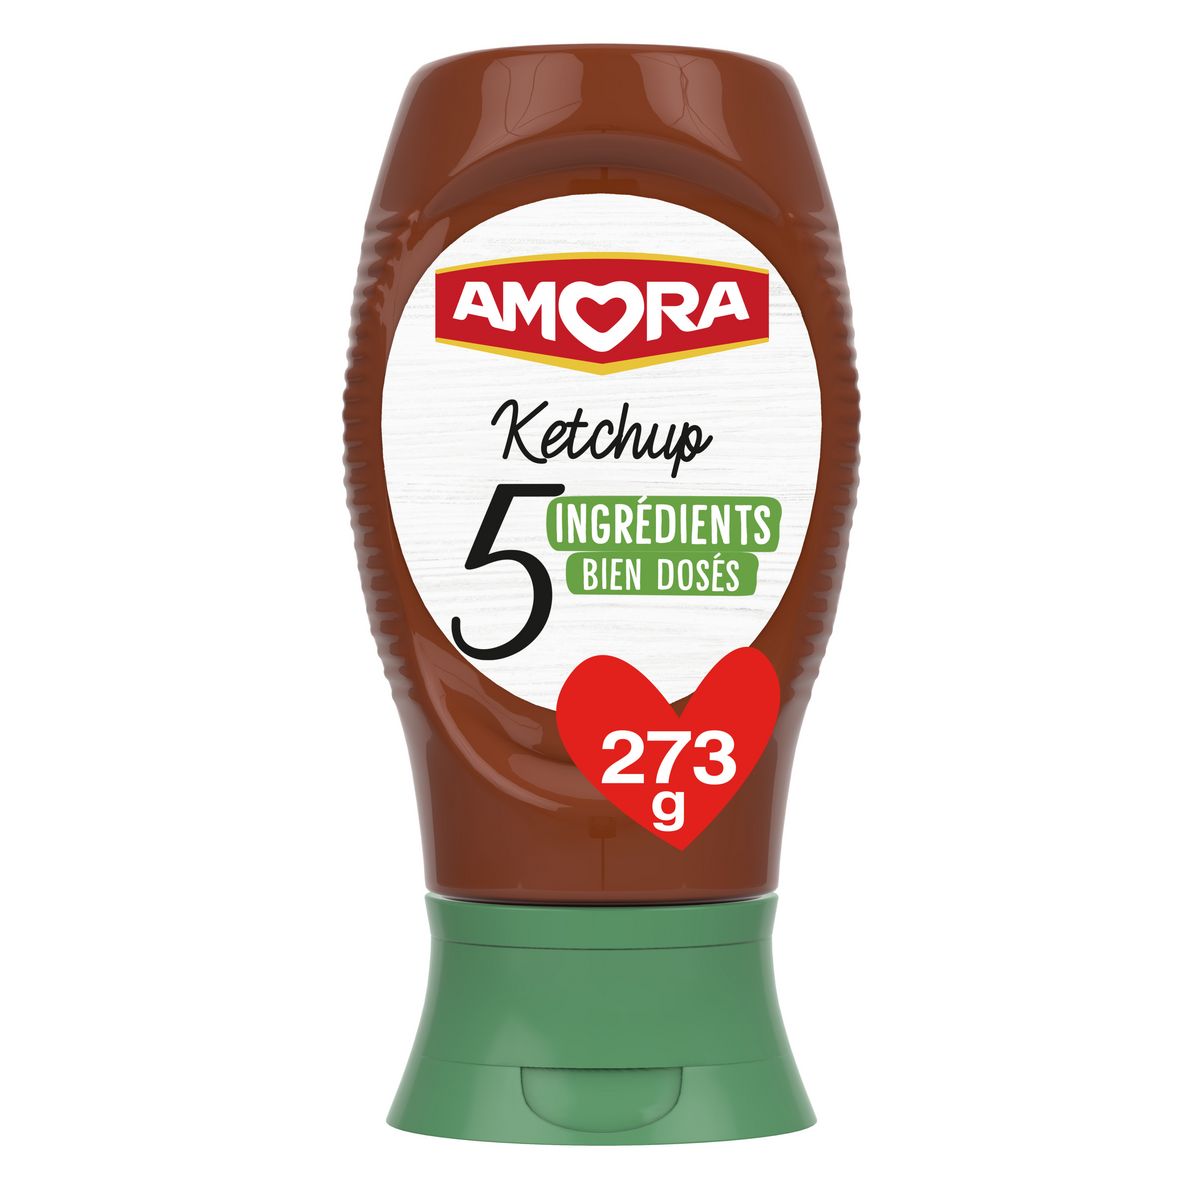 AMORA Ketchup 5 ingrédients 273g